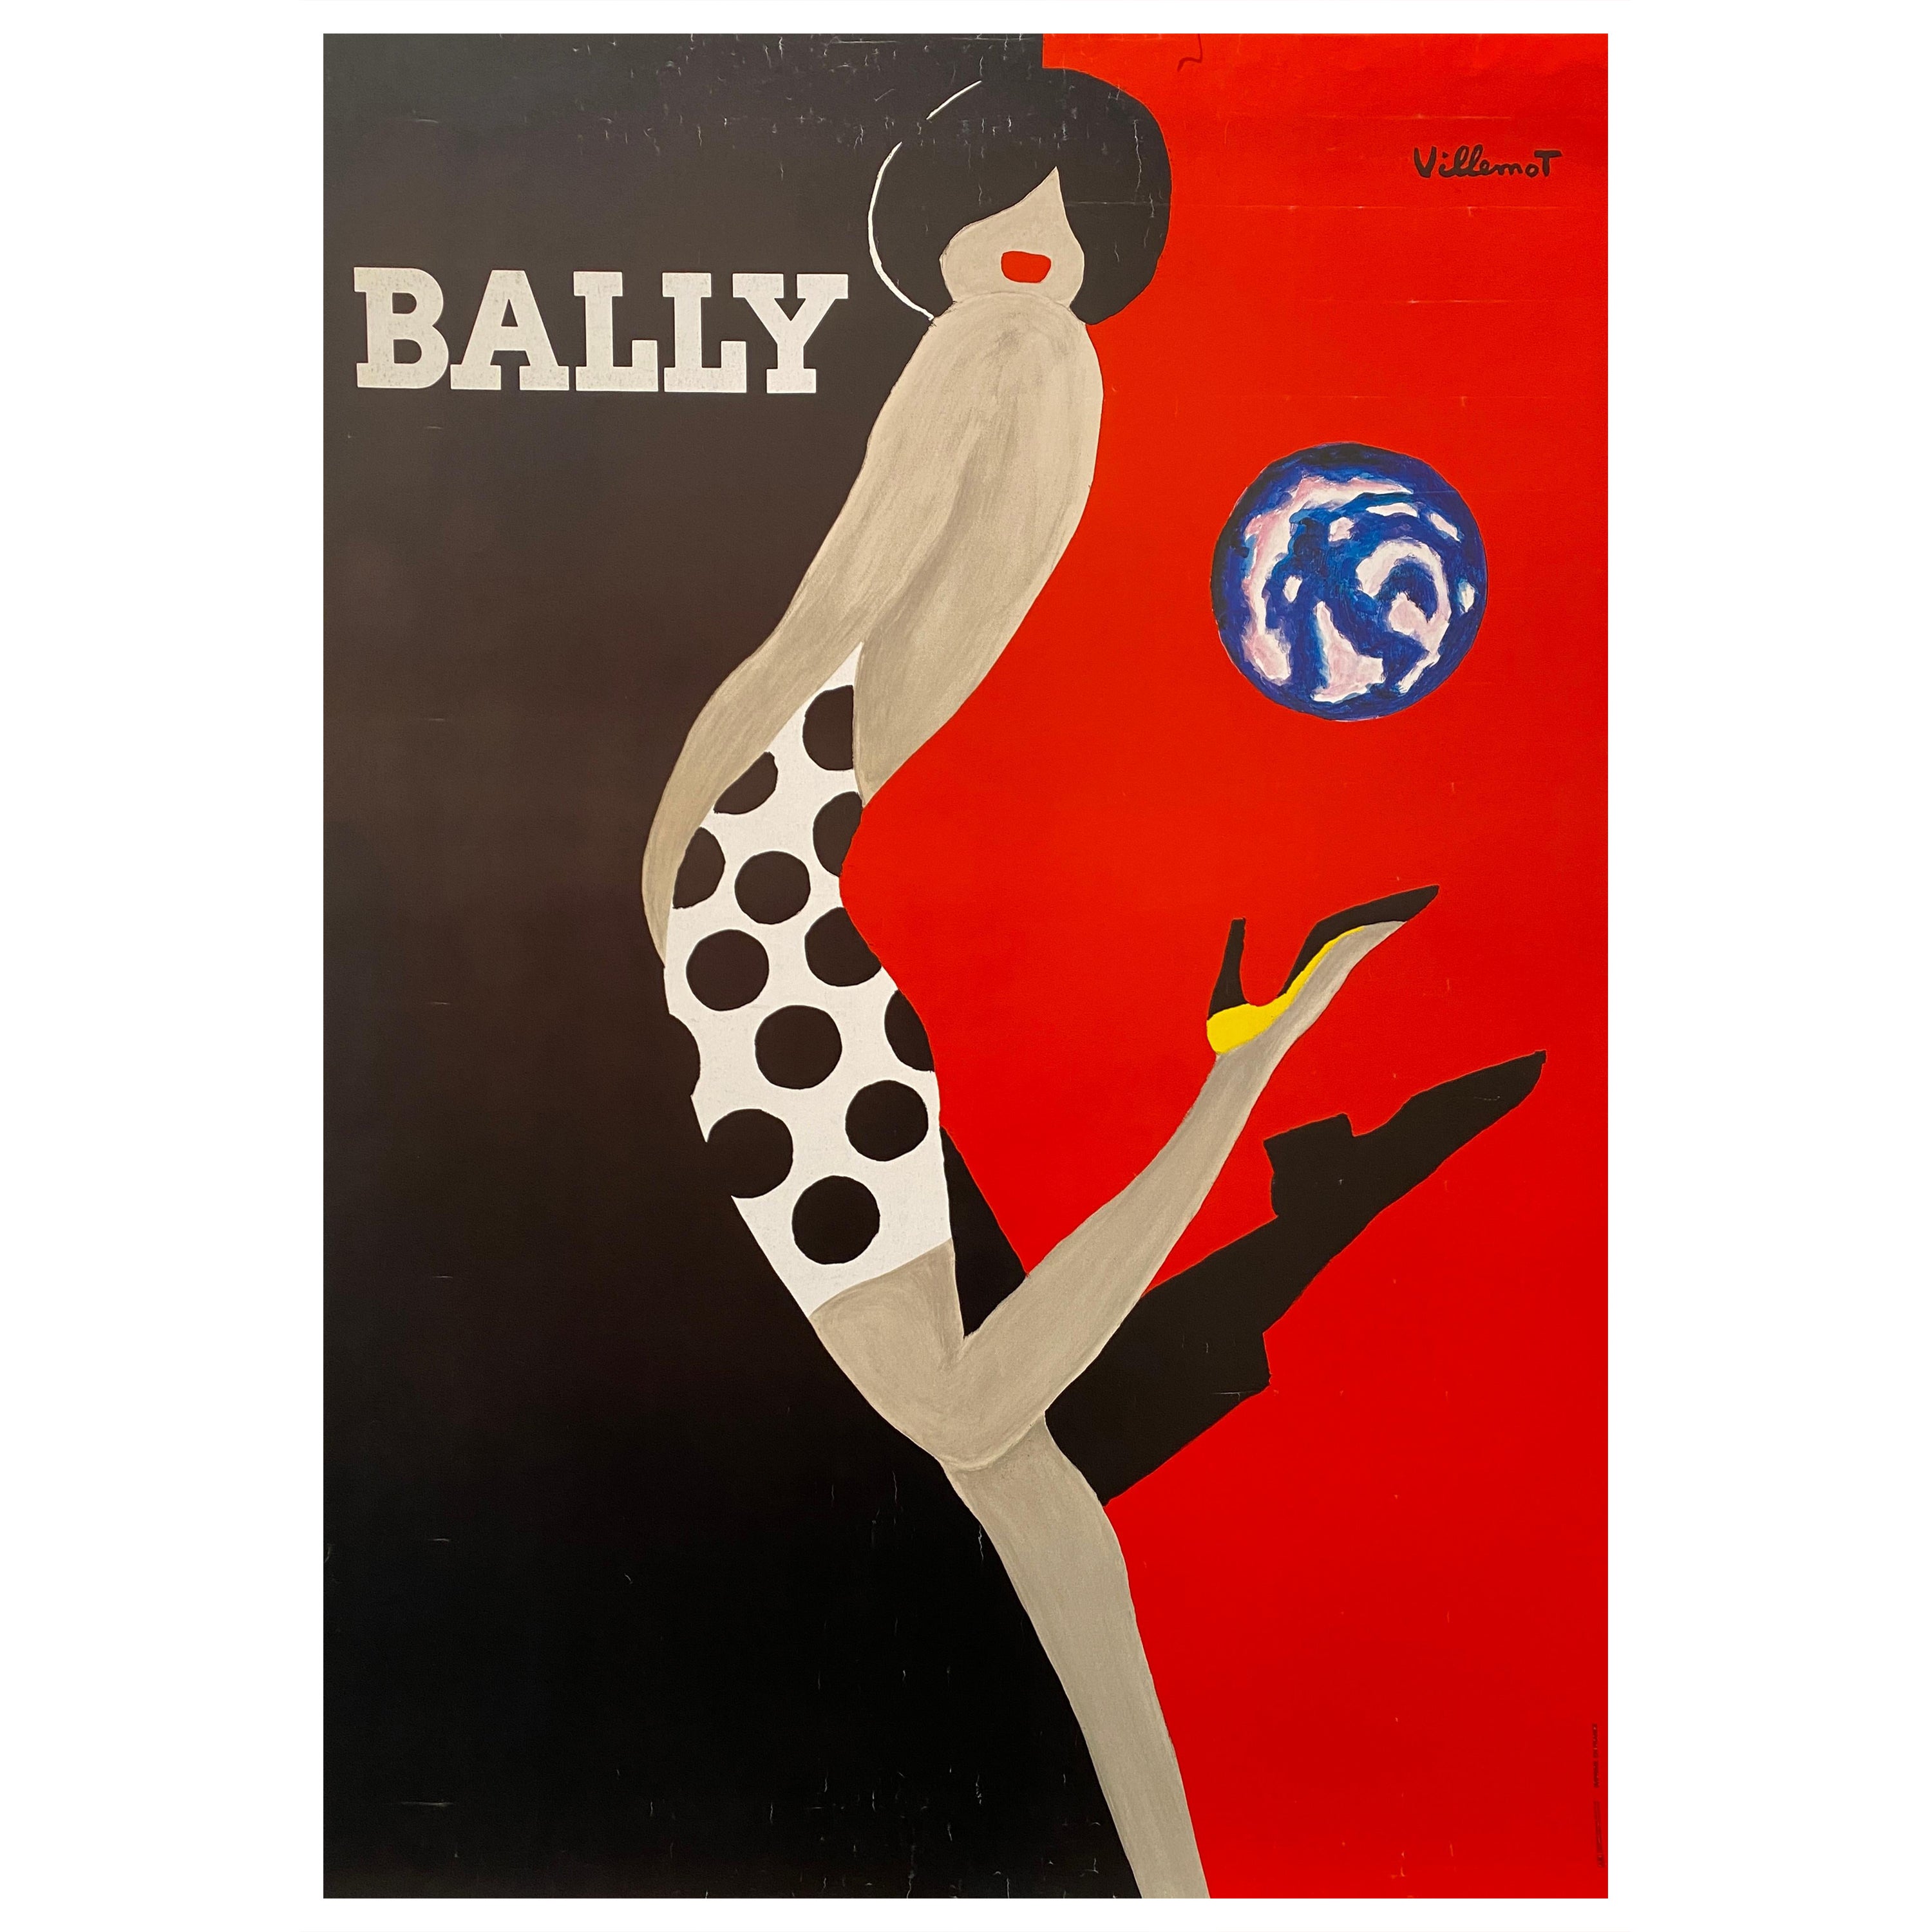 Original Vintage French Bally Shoe Poster, 'Bally Kick' by Bernard Villemot